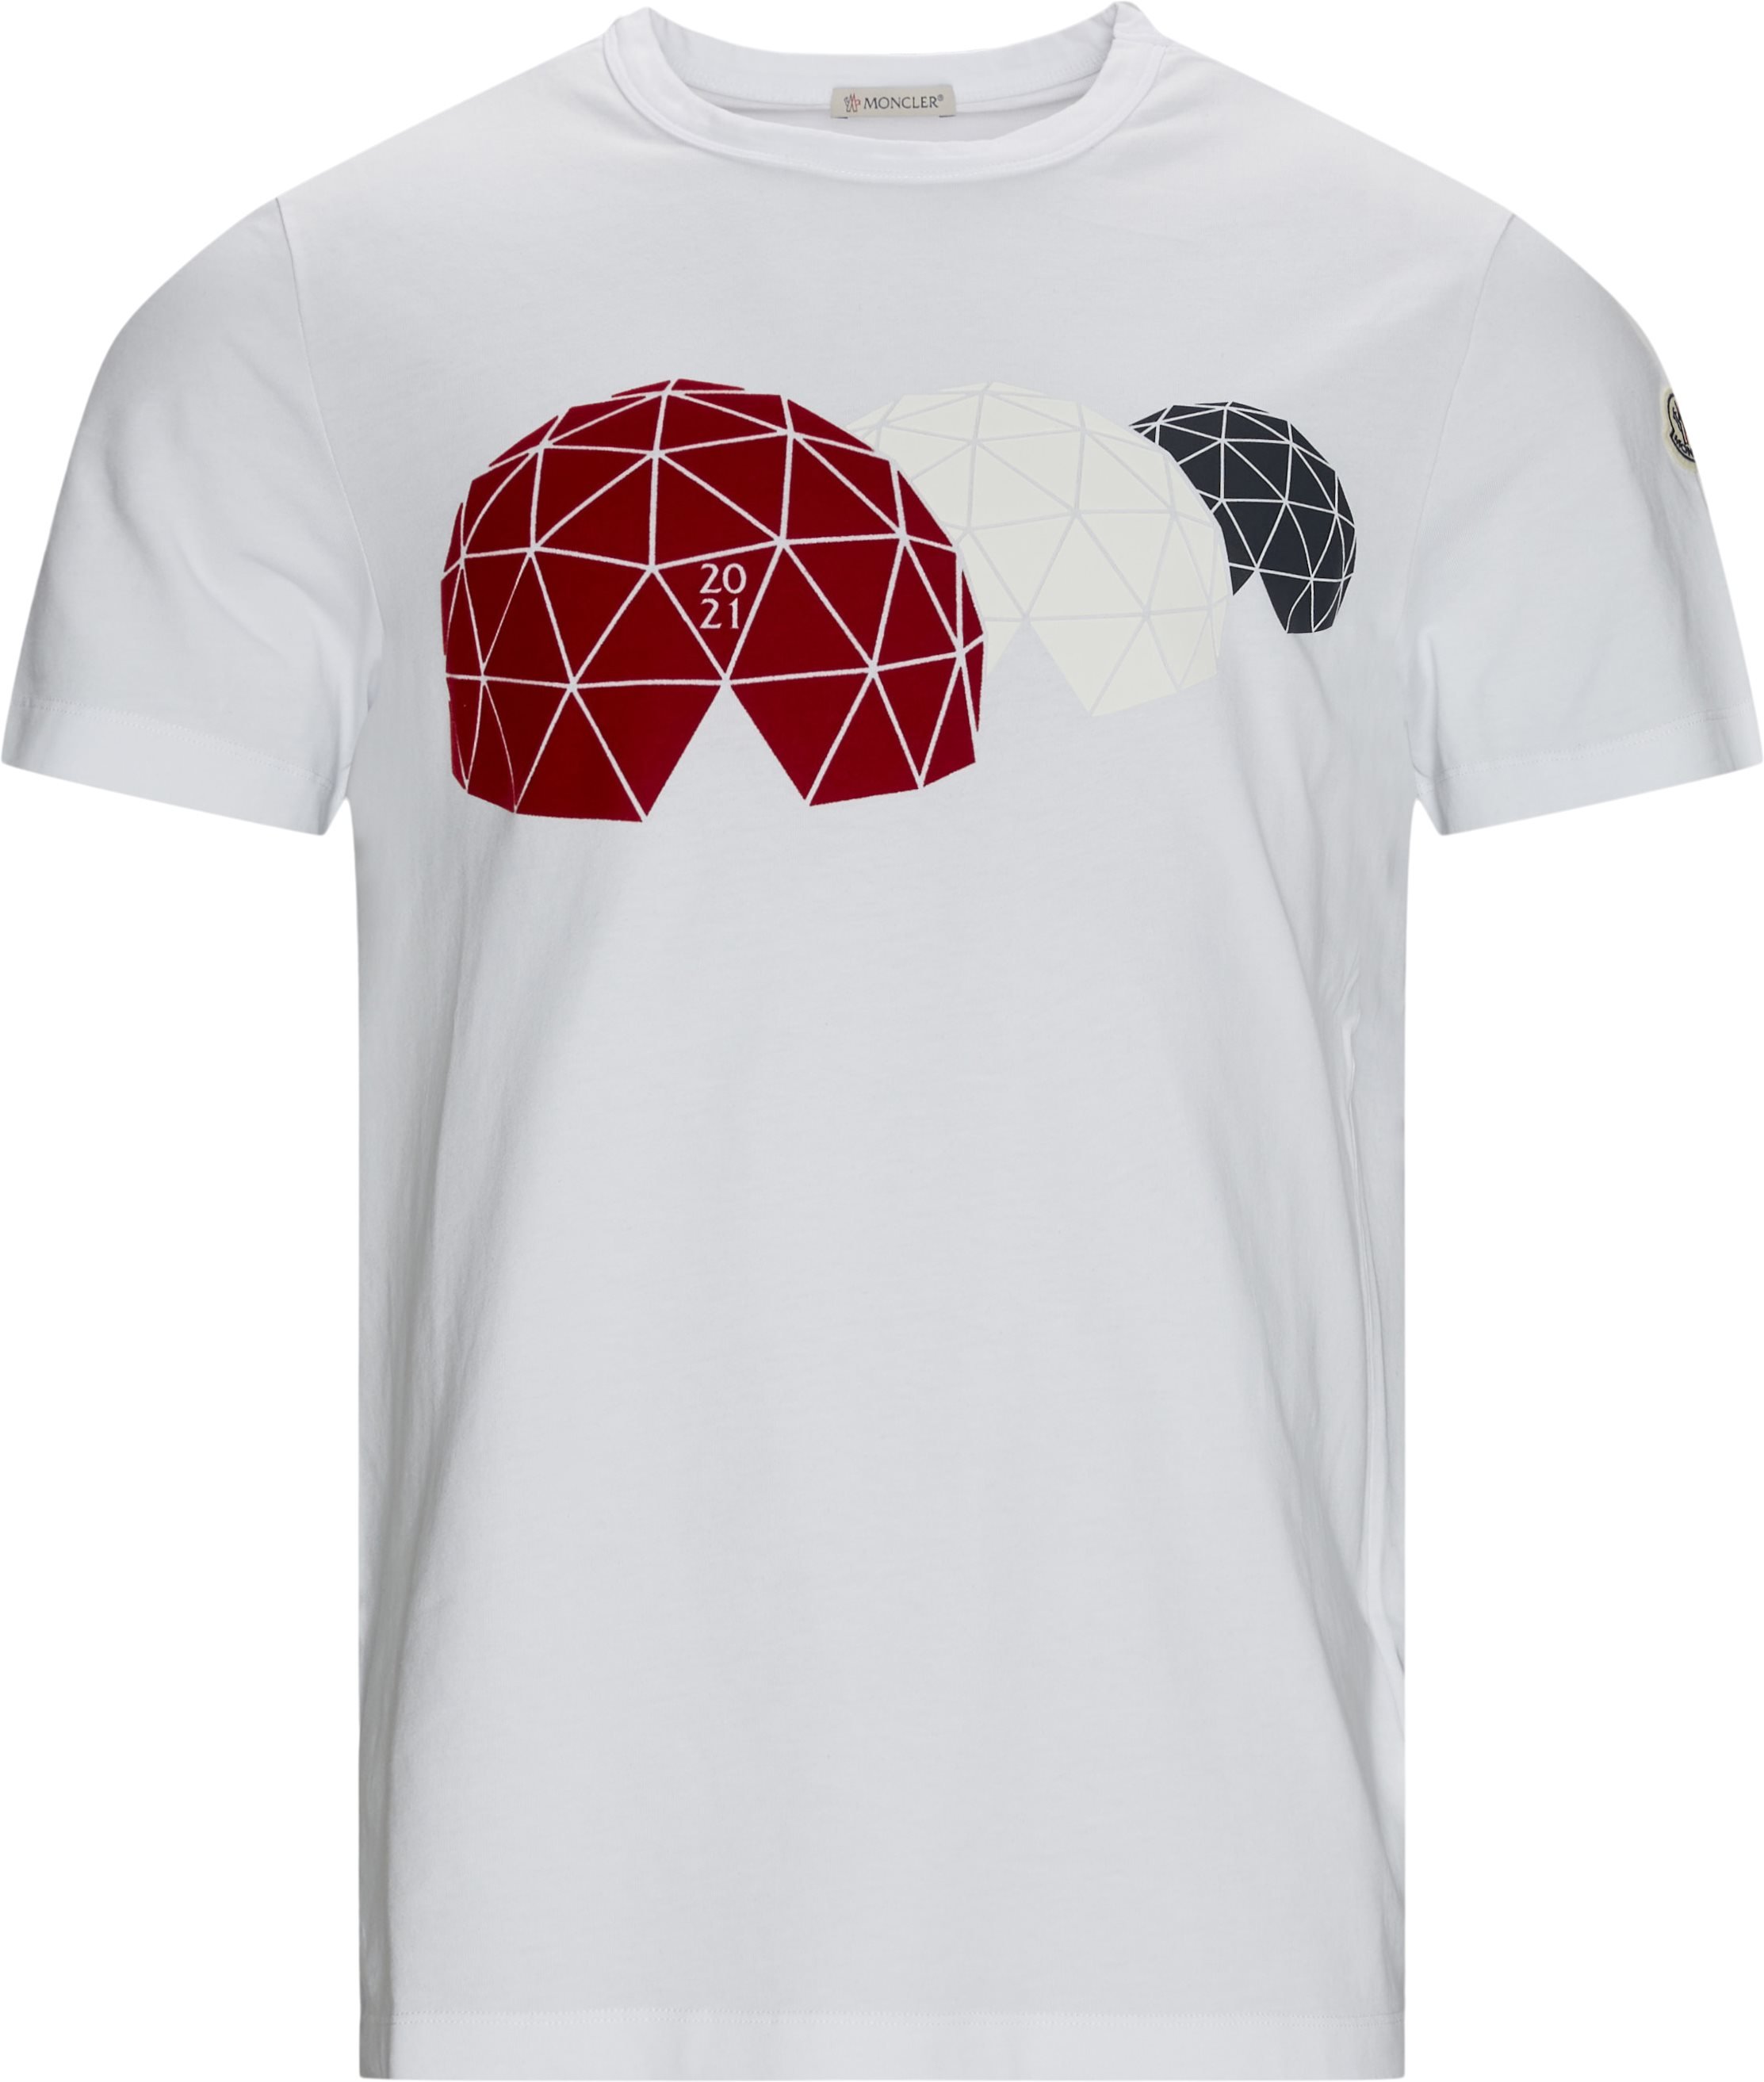 Maglia Tee - T-shirts - Regular fit - Hvid